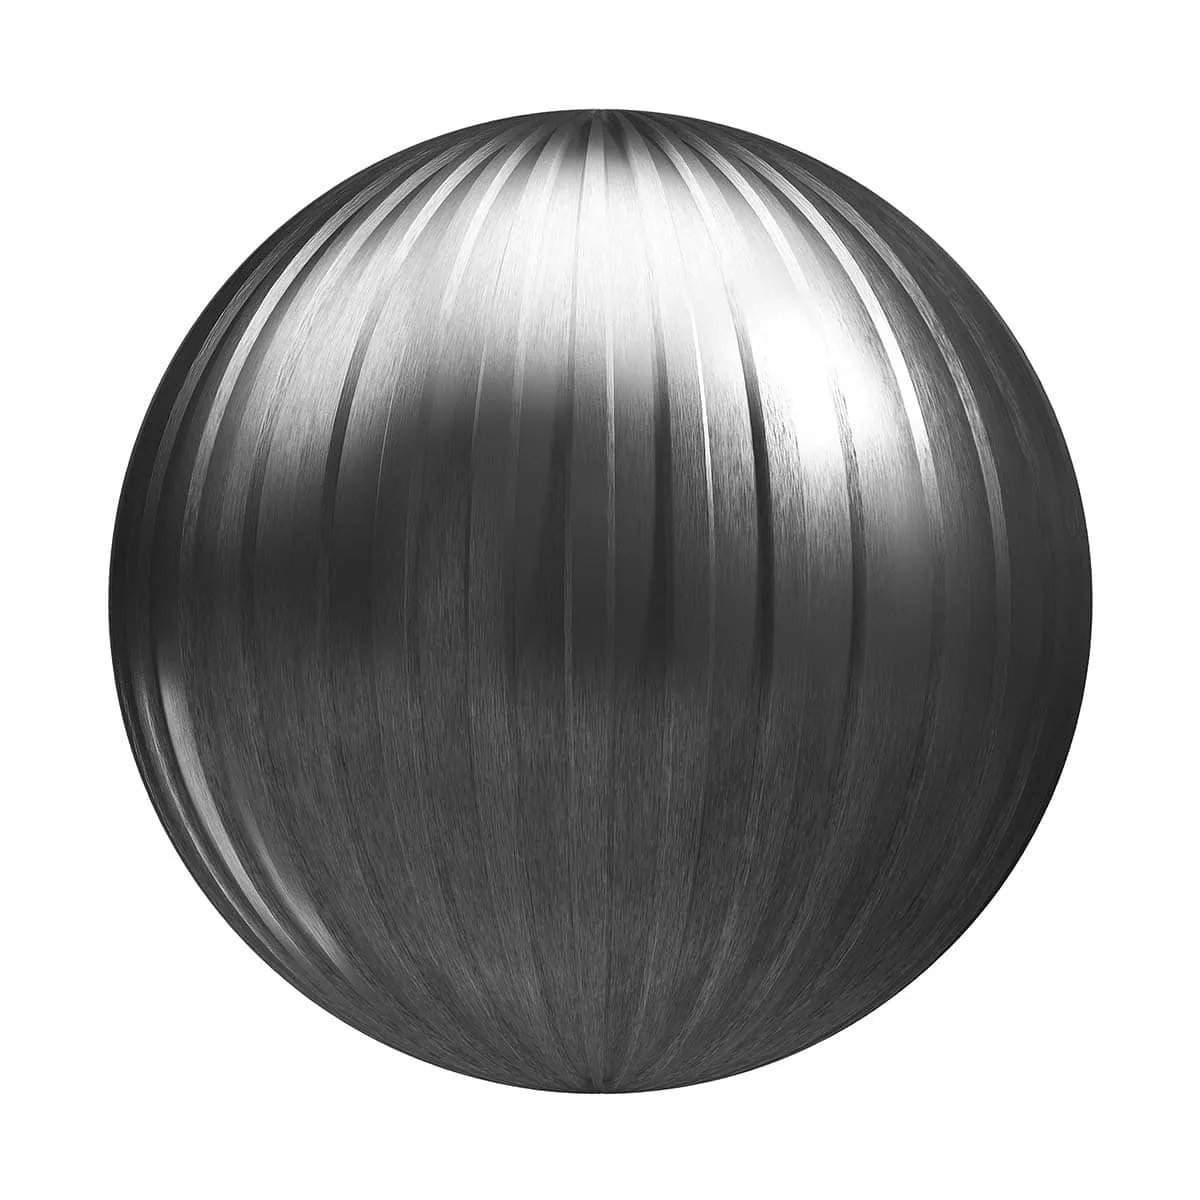 PBR Textures Volume 26 – Metals – 4K – 8K – metal_ledges_26_53